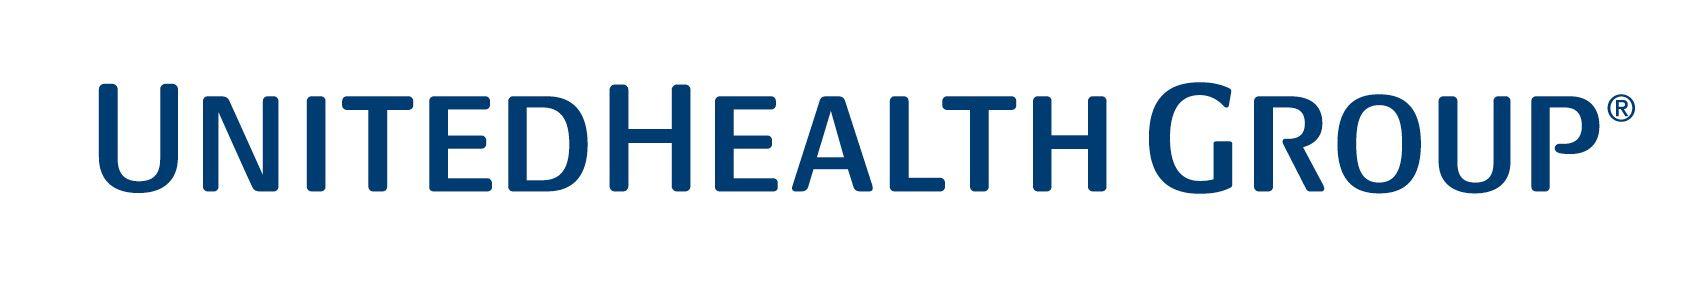 UnitedHealth Logo - Media Library